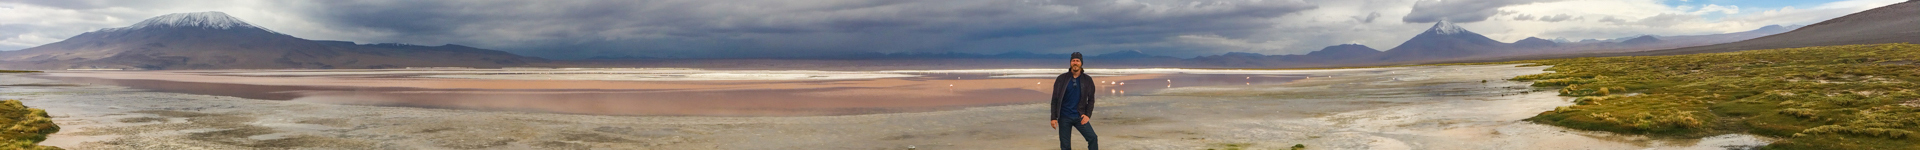 Laguna Colorada - Sur Lípez, Bolivia